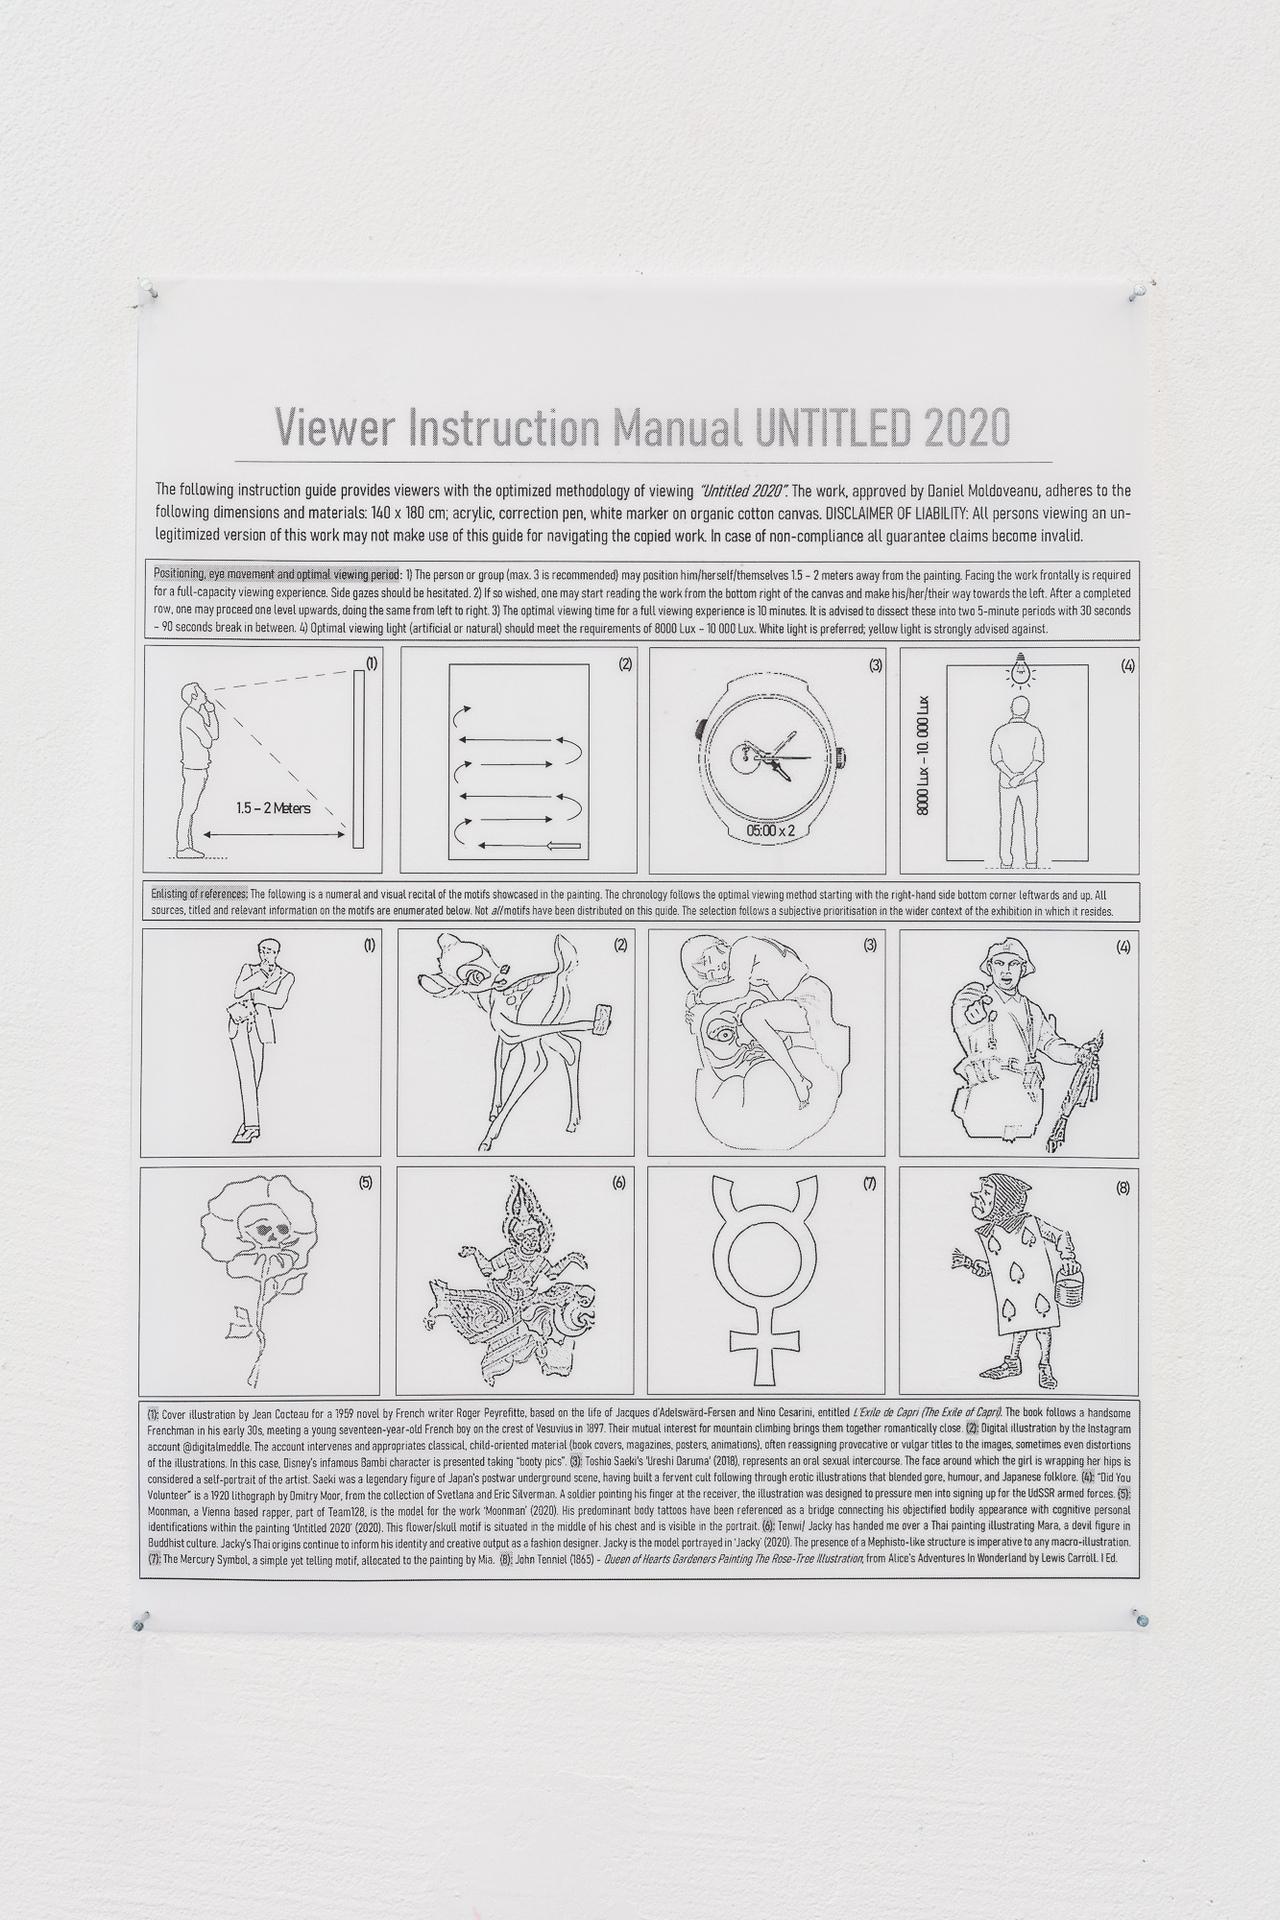 10. Daniel Moldoveanu, Untitled, 2020, Viewer Instruction Manual, print on transparent paper, 46 x 31.5 cm